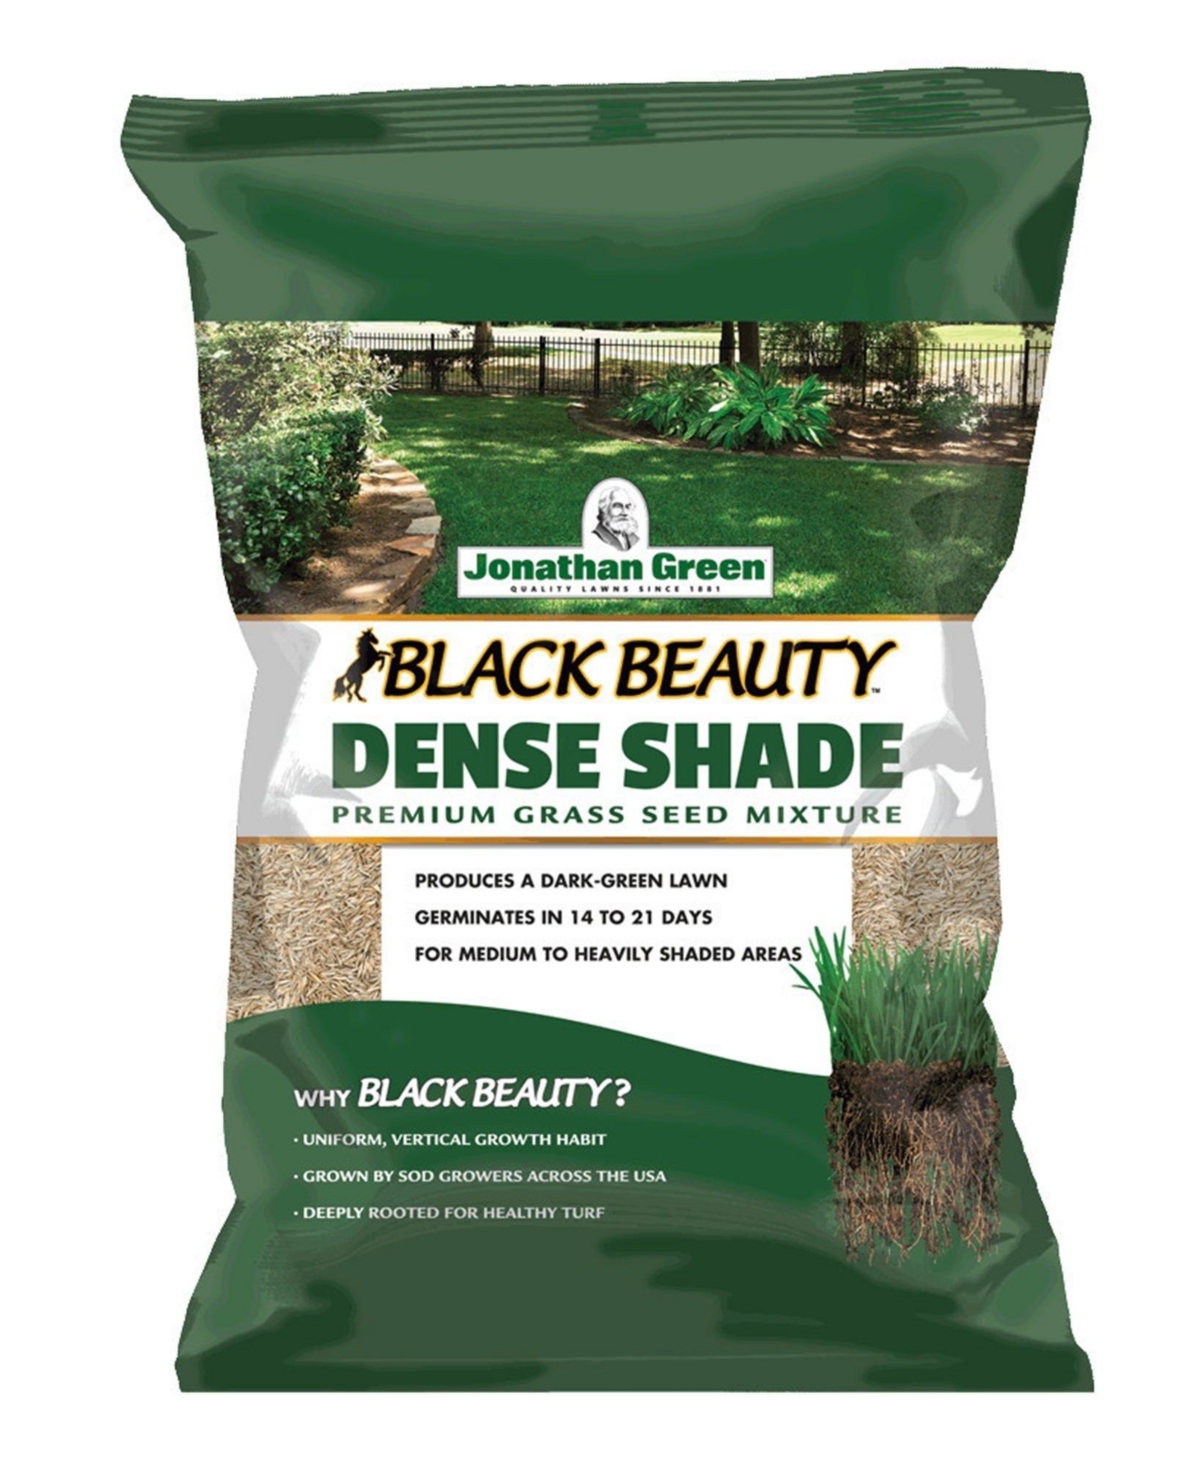 Black Beauty Dense Shade Grass Seed Mix, 7lb bag - Brown